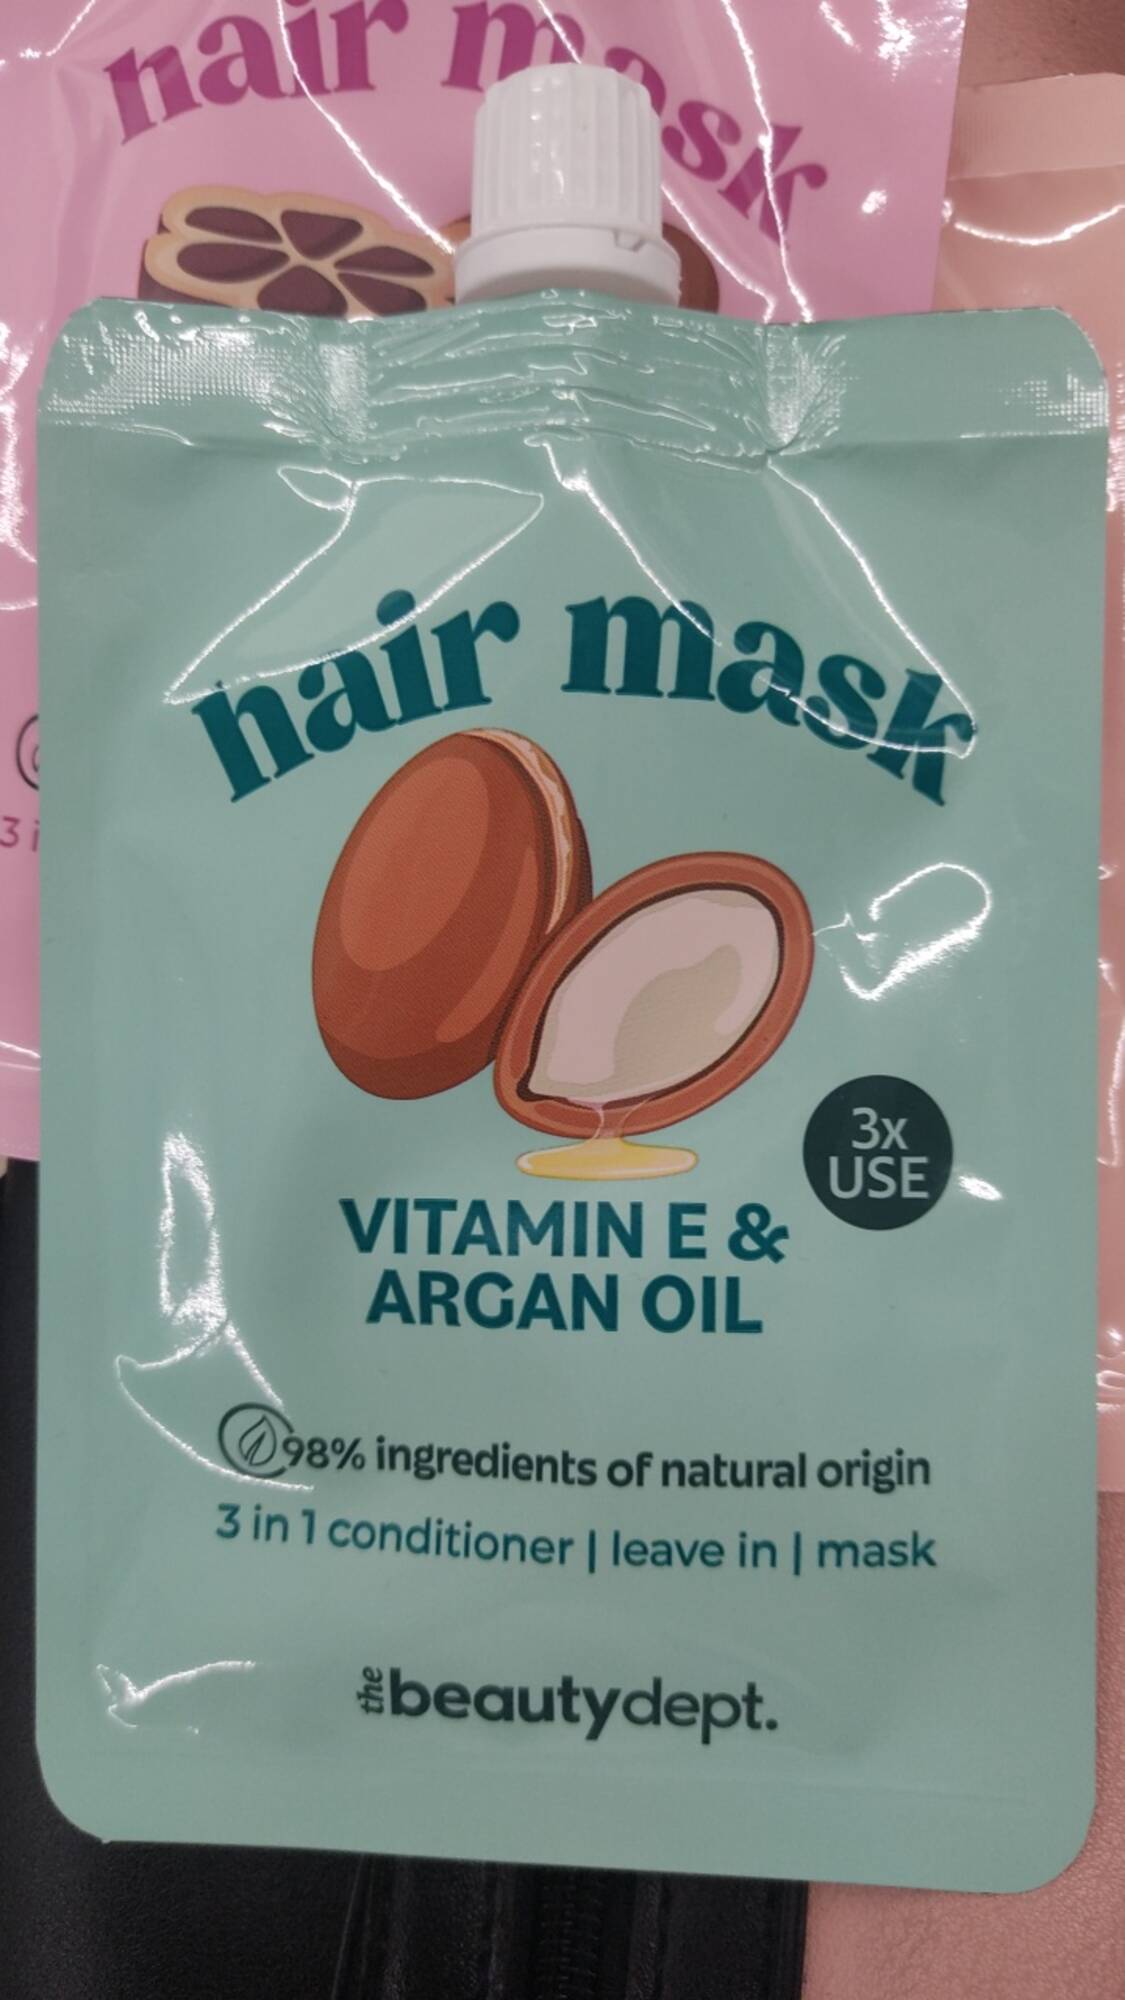 THE BEAUTY DEPT - Hair mask vitamin E & argan oil